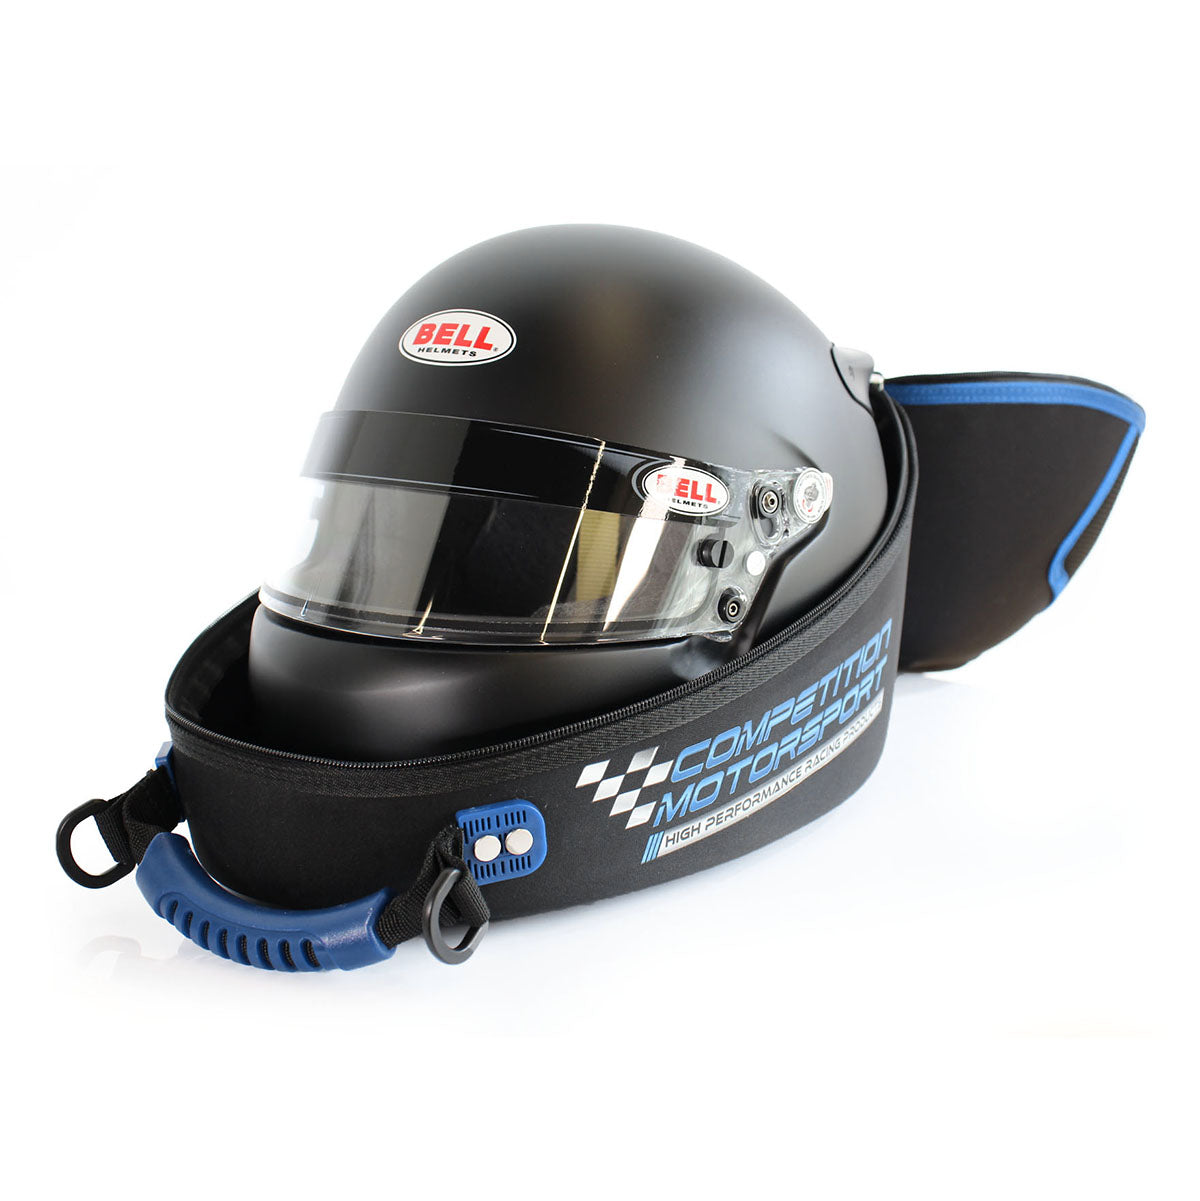 "Helmet Storage Solution - CMS Performance Racing Helmet Bag"